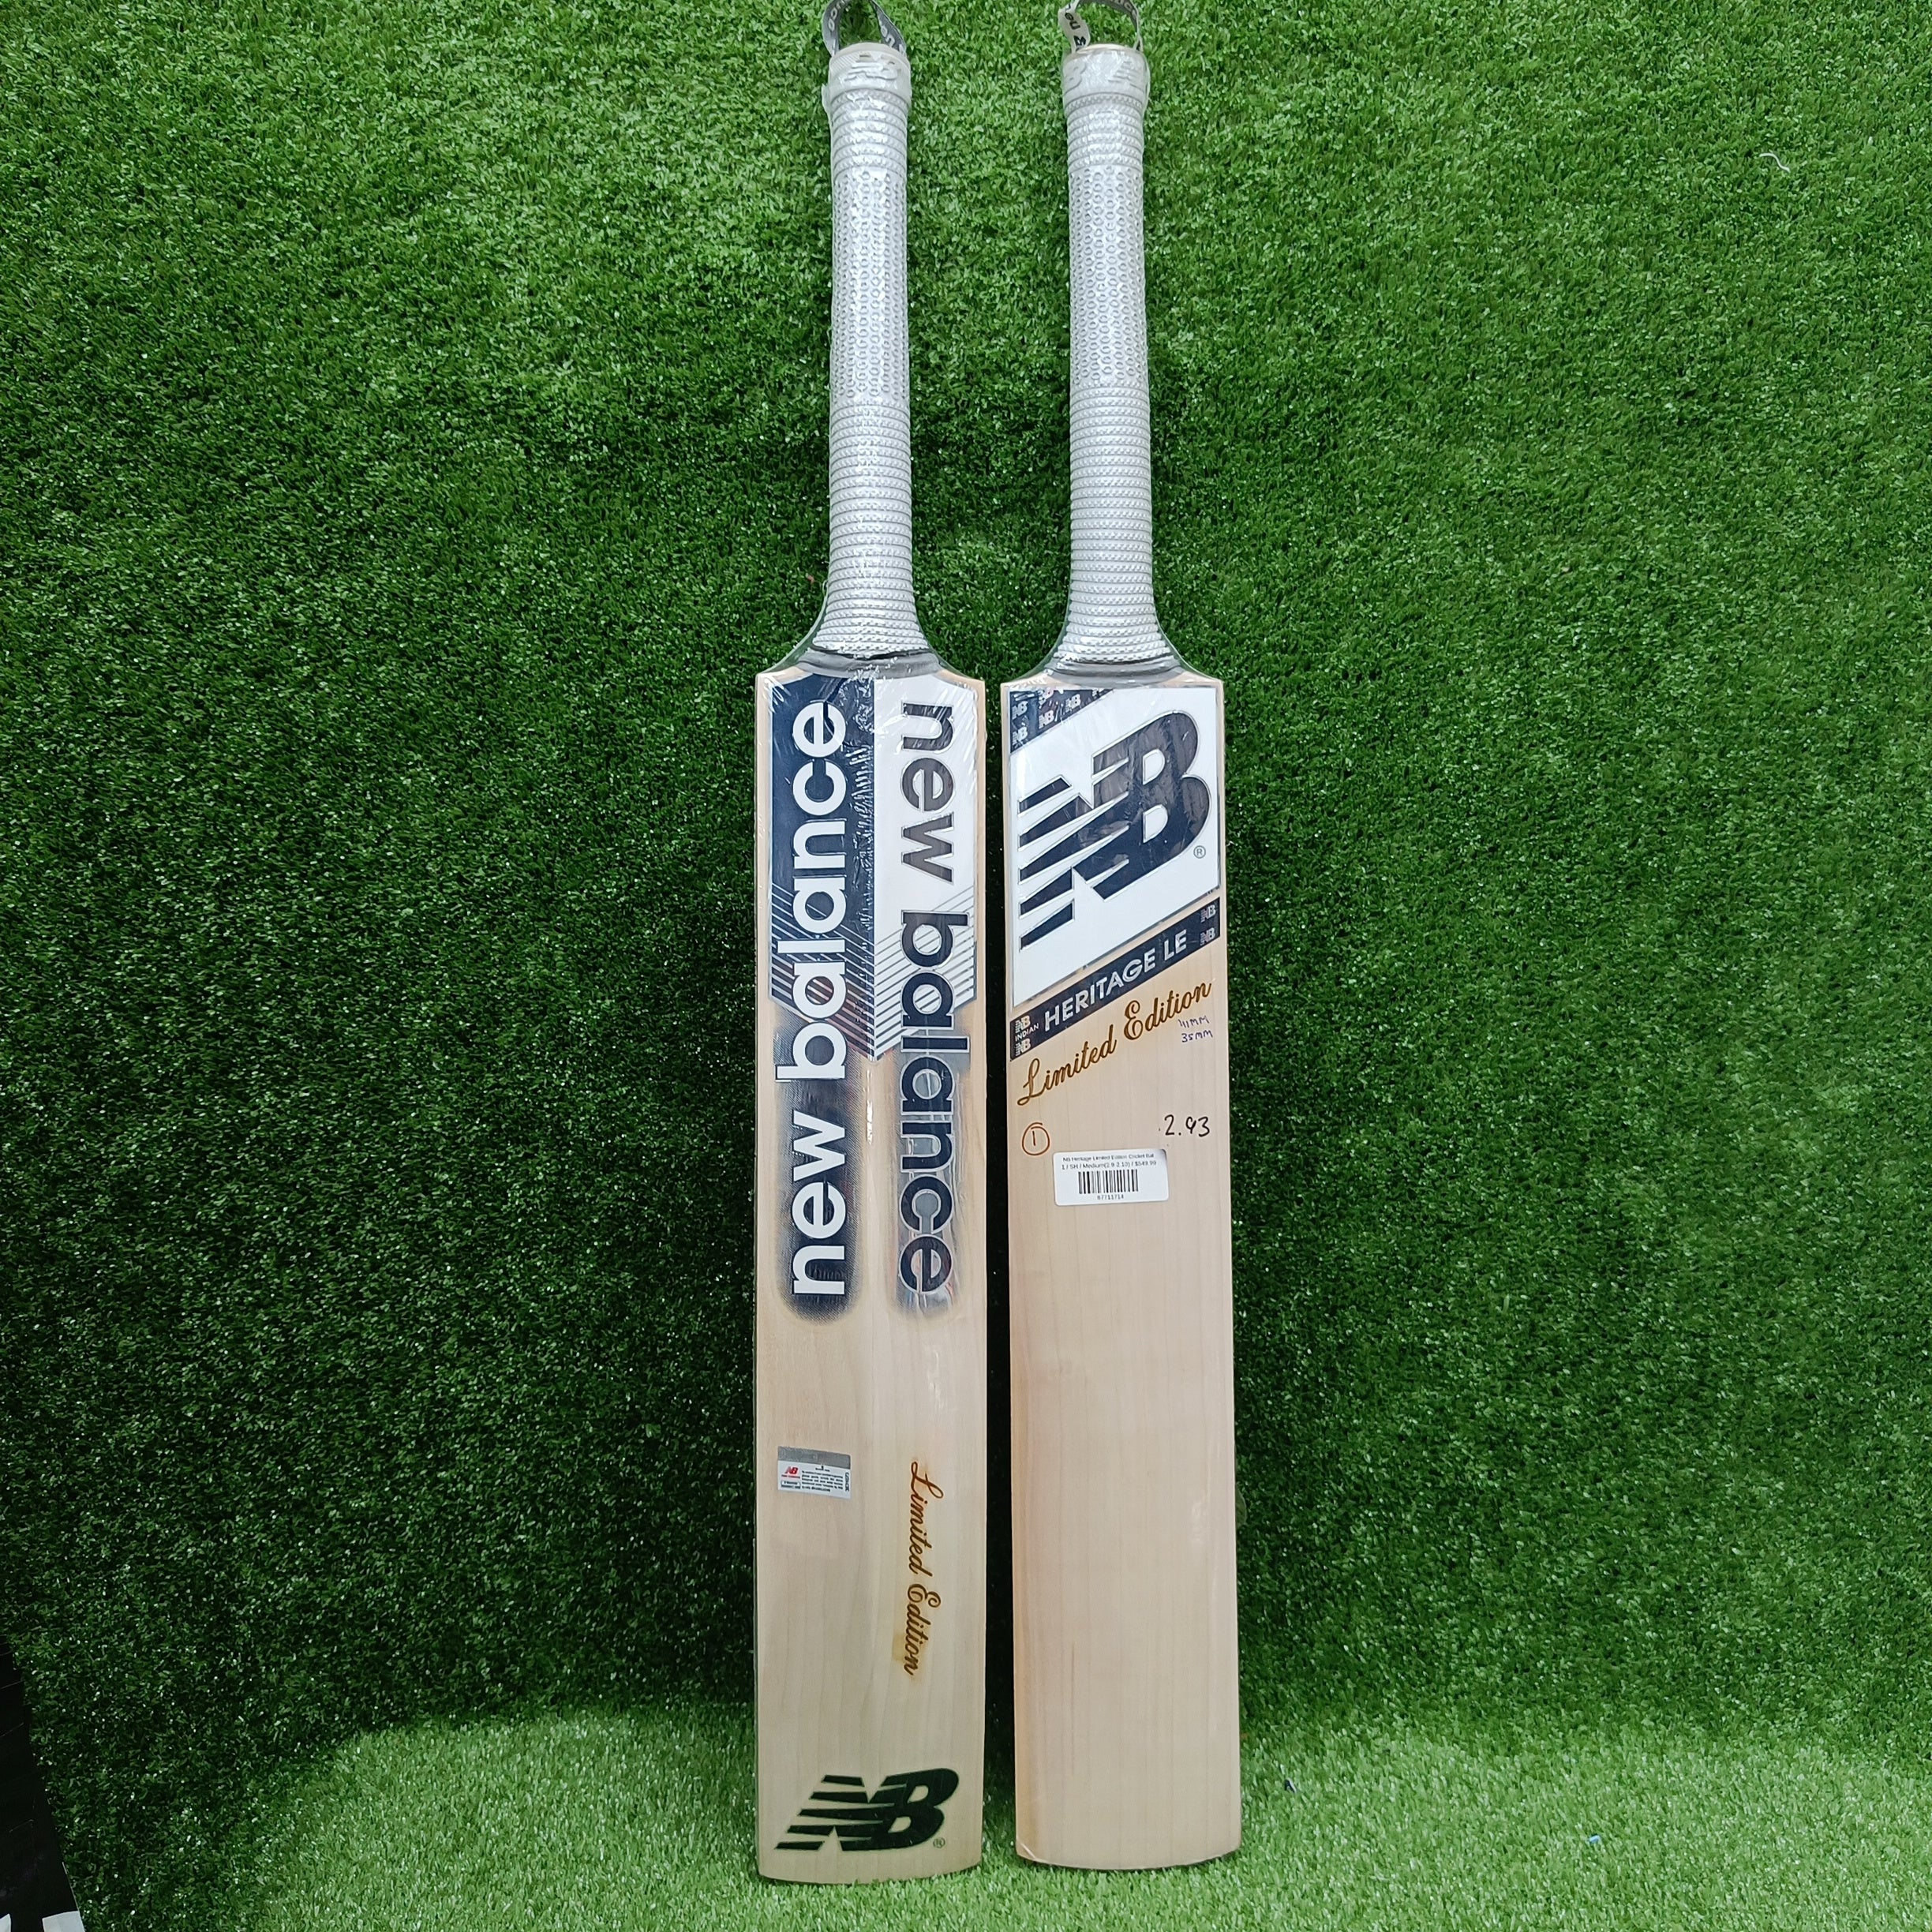 NB Heritage Limited Edition Cricket Bat